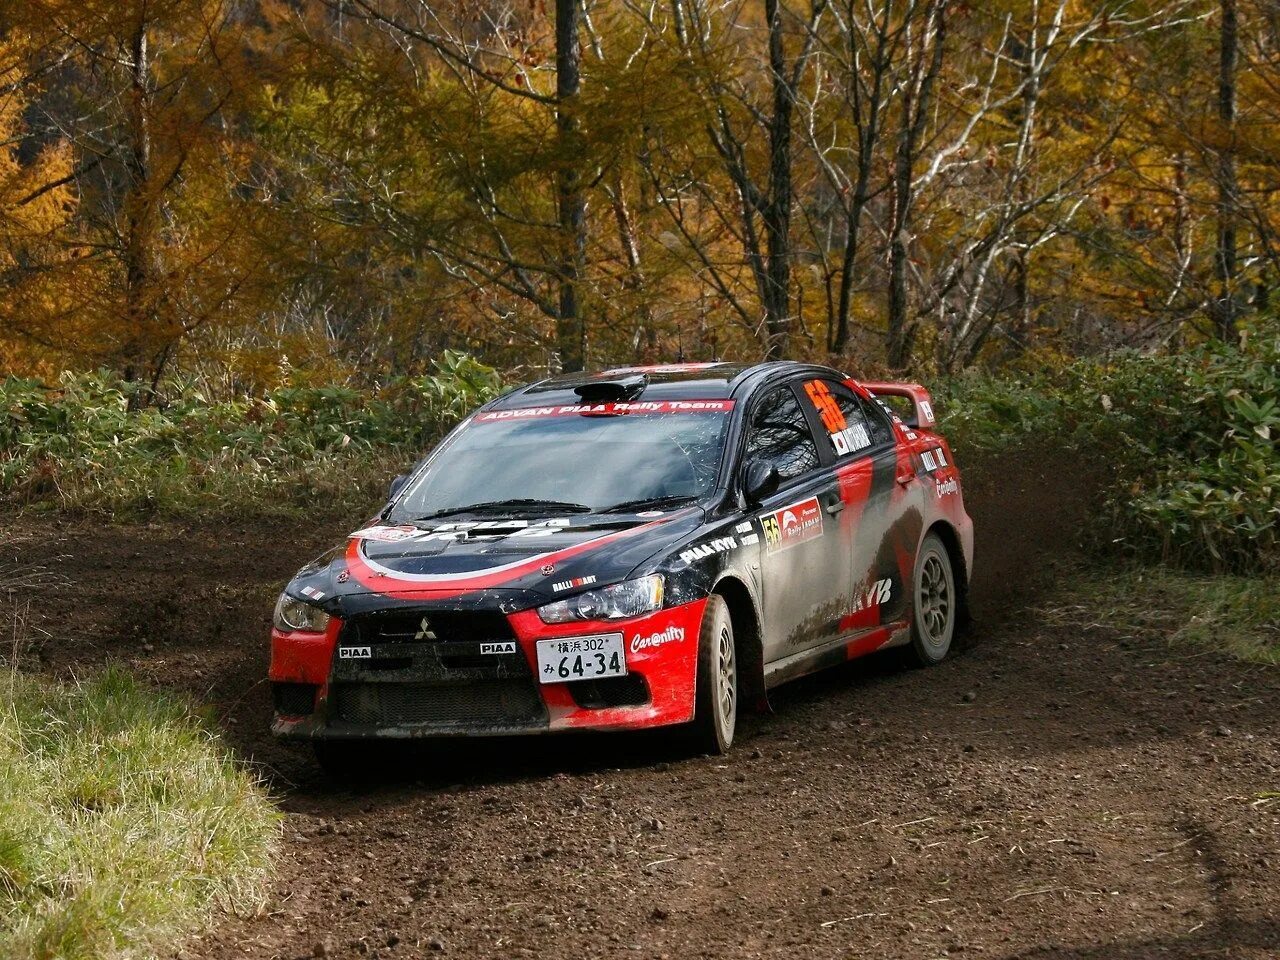 Ралли икс. Ралли Митсубиси Эволюшн 10. Митсубиси Лансер Эво 10 ралли. Mitsubishi EVO WRC Lancer 10. Mitsubishi Lancer Evolution 10 WRC.